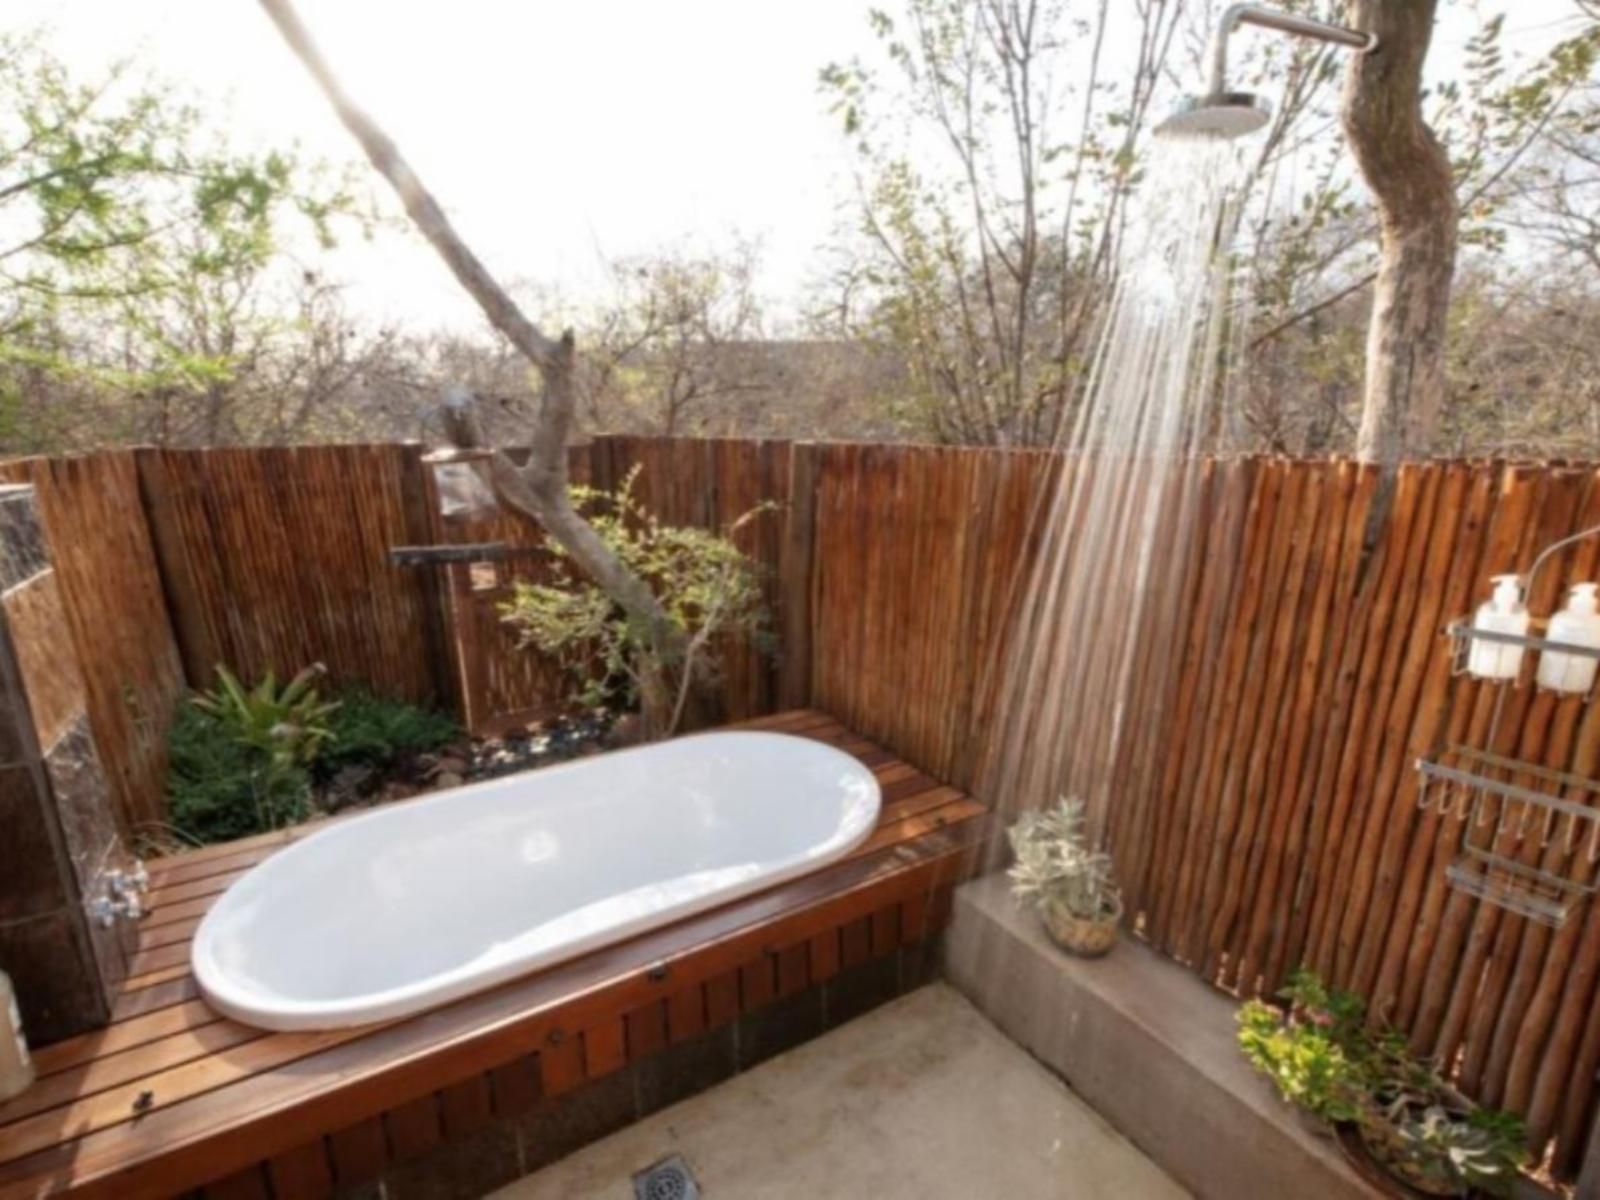 Nyaleti Lodge Hoedspruit Limpopo Province South Africa Bathroom, Garden, Nature, Plant, Swimming Pool